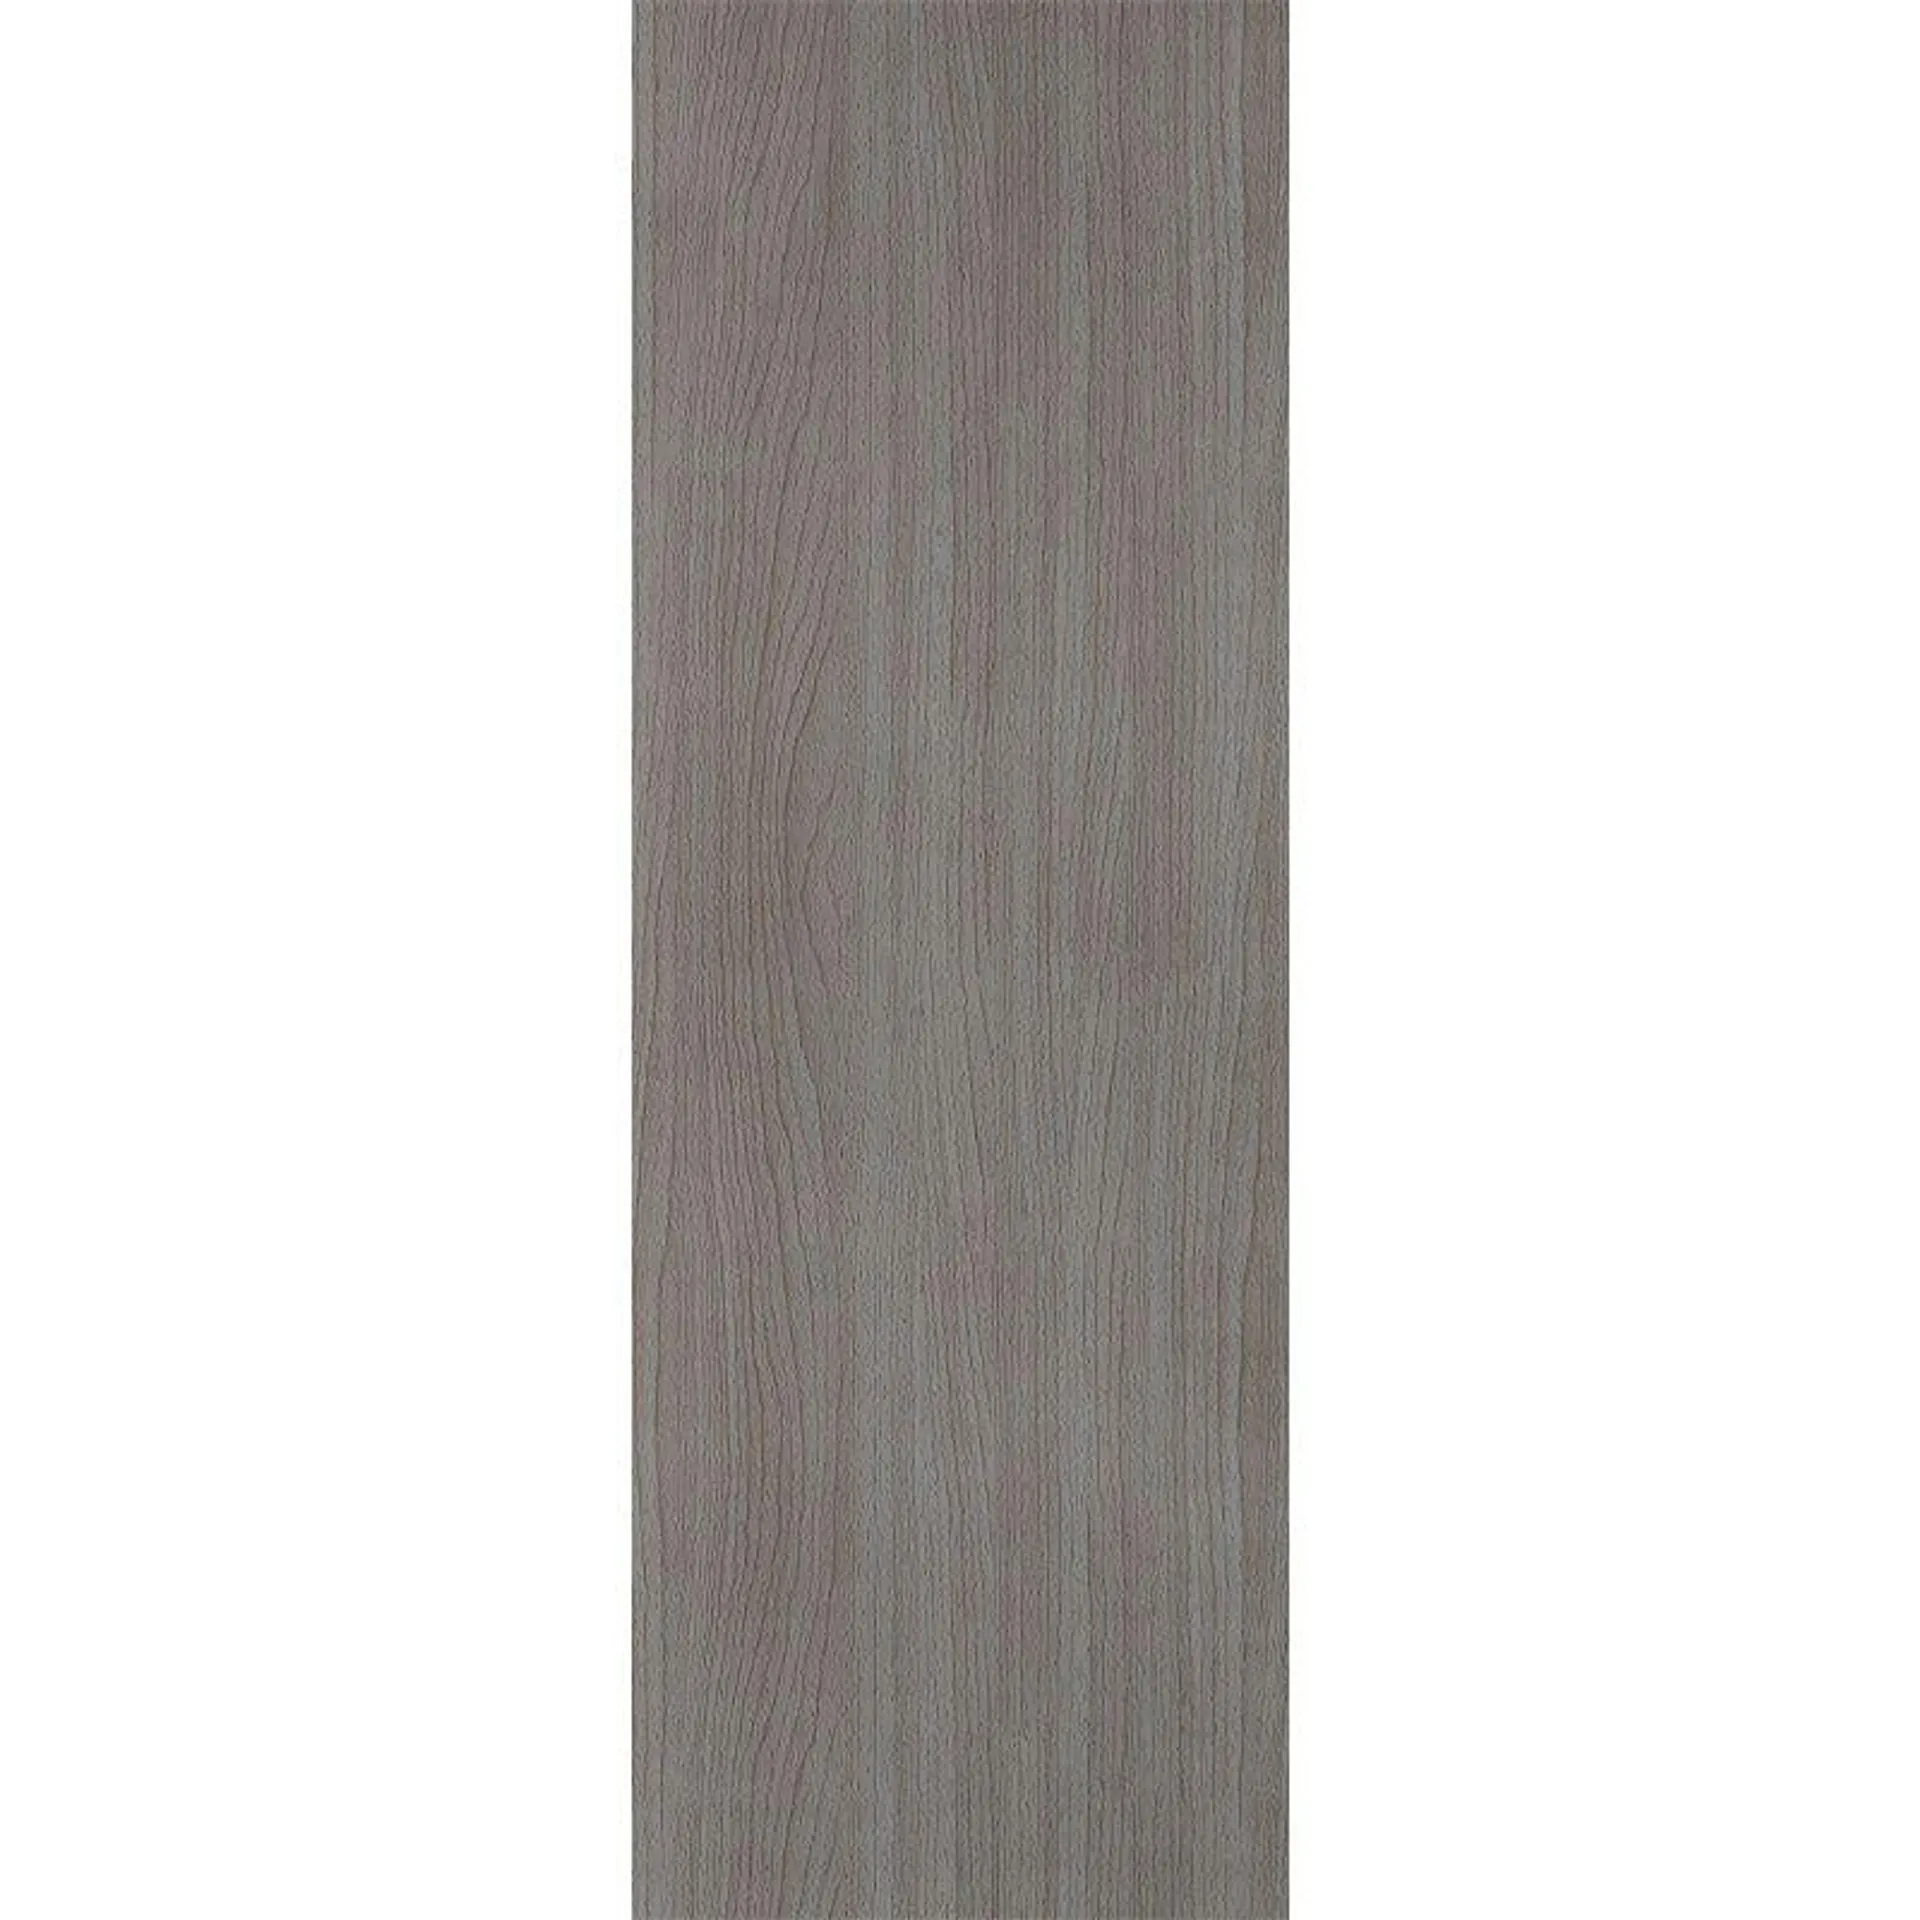 Vesta PVC Ceiling Panel 3.95mx300mm